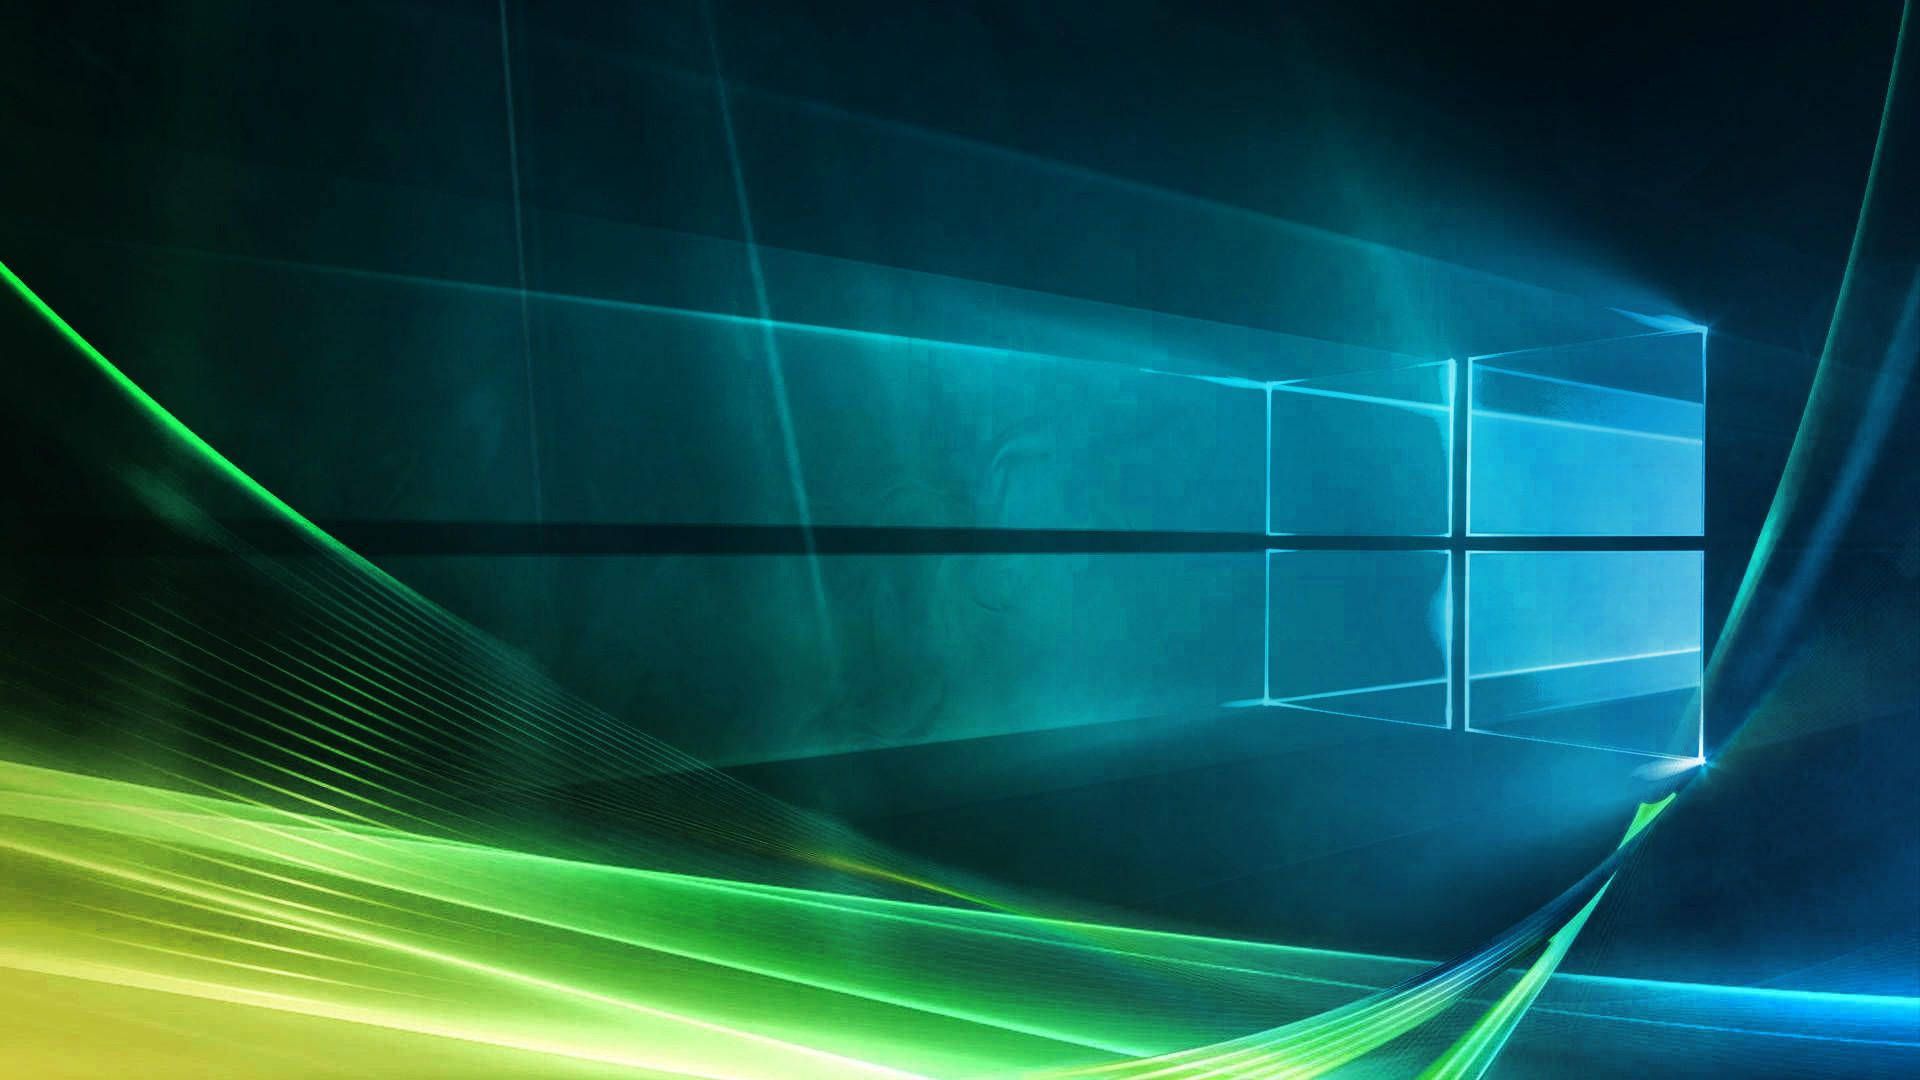  Windows Vista Hintergrundbild 1920x1080. + Windows Vista Wallpaper Full HD, 4K✓Free to Use